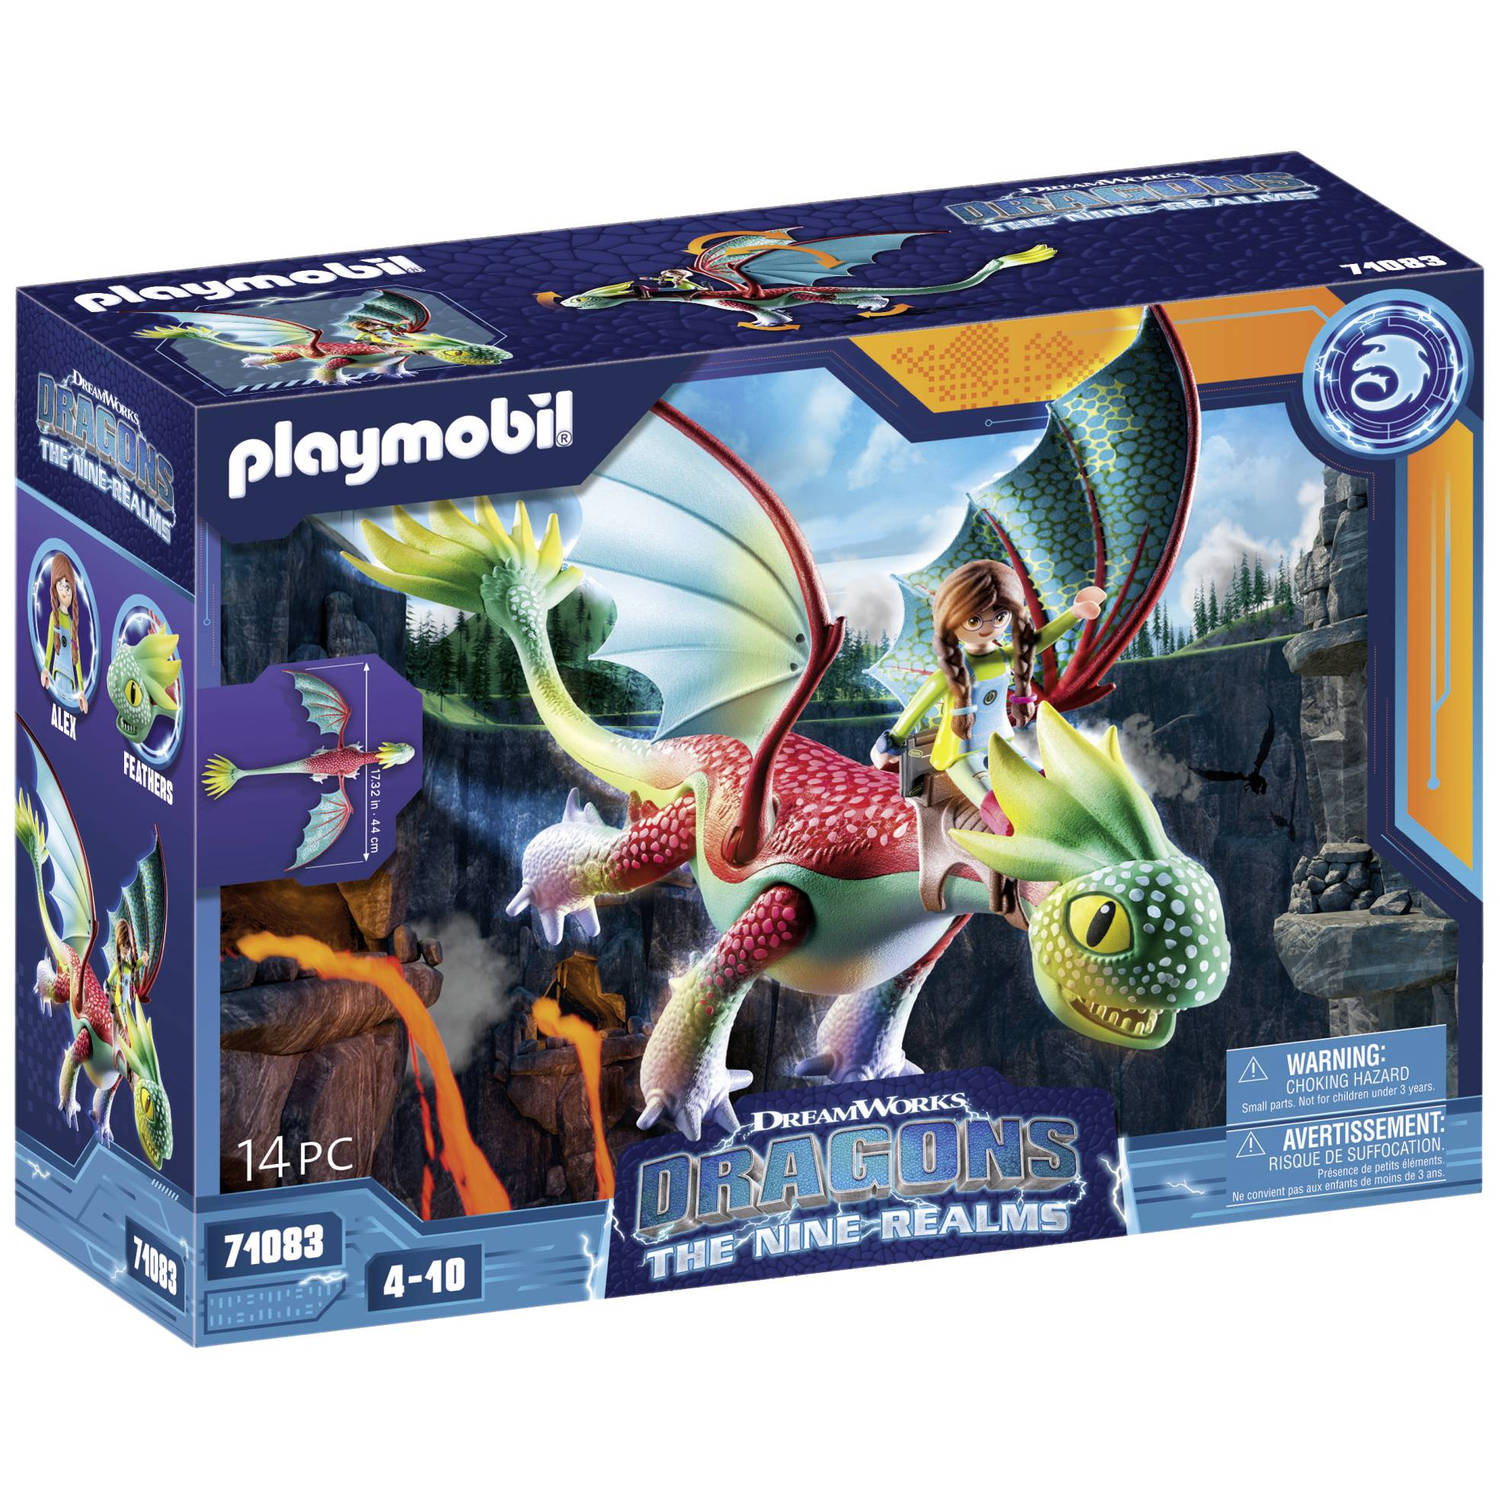 Playmobil® Constructie-speelset Dragons: The Nine Realms Feathers & Alex (71083) (14 stuks)